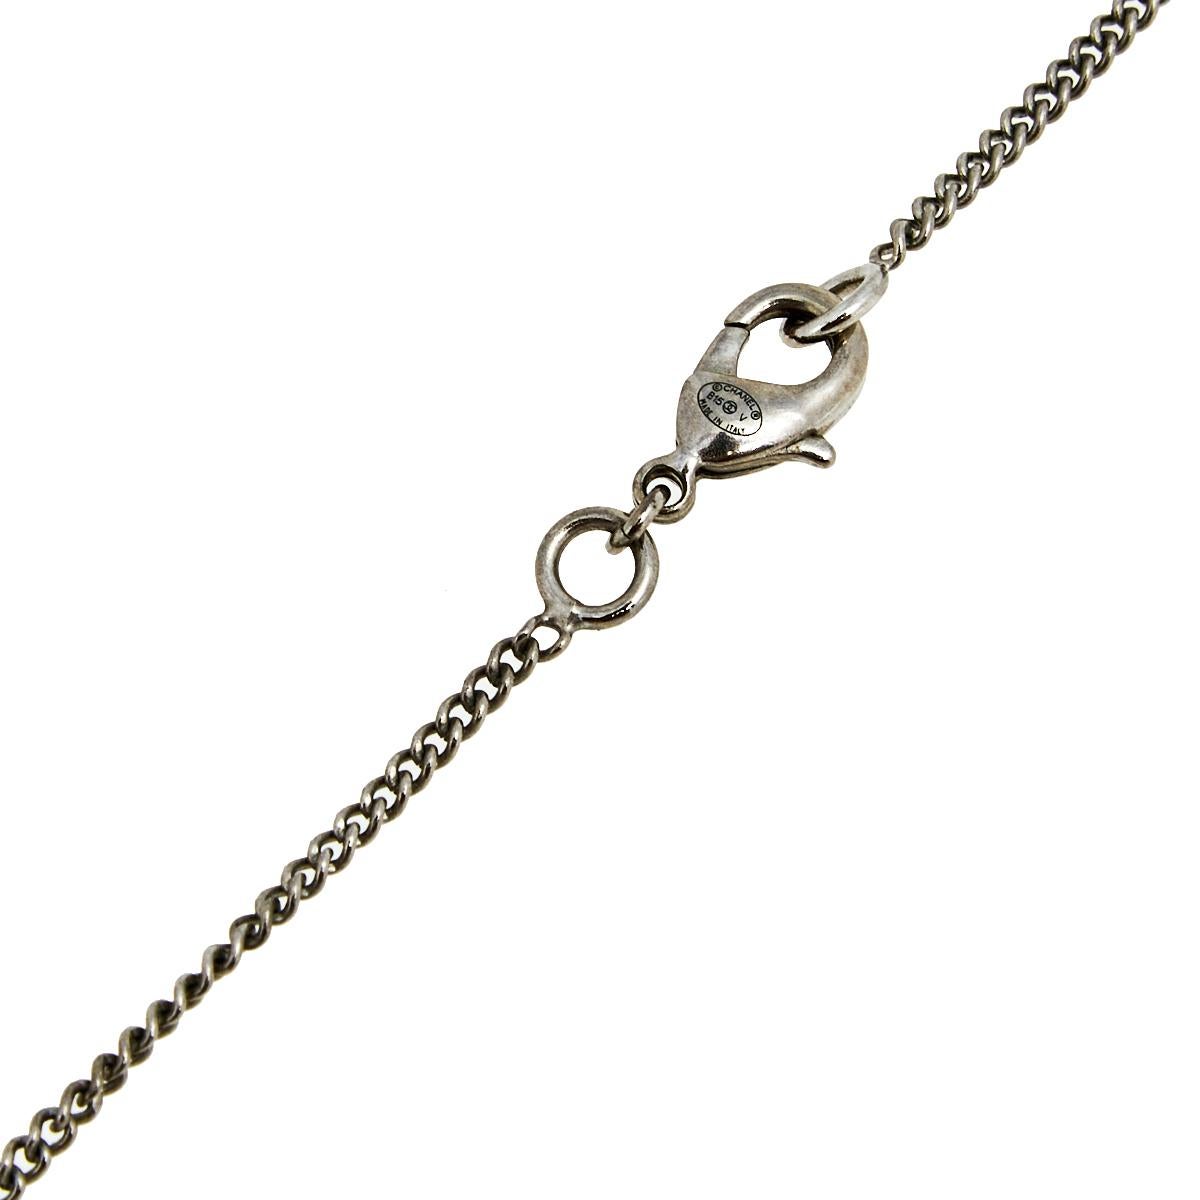 Contemporary Chanel CC Faux Pearl Crystals Silver Tone Metal Pendant Necklace